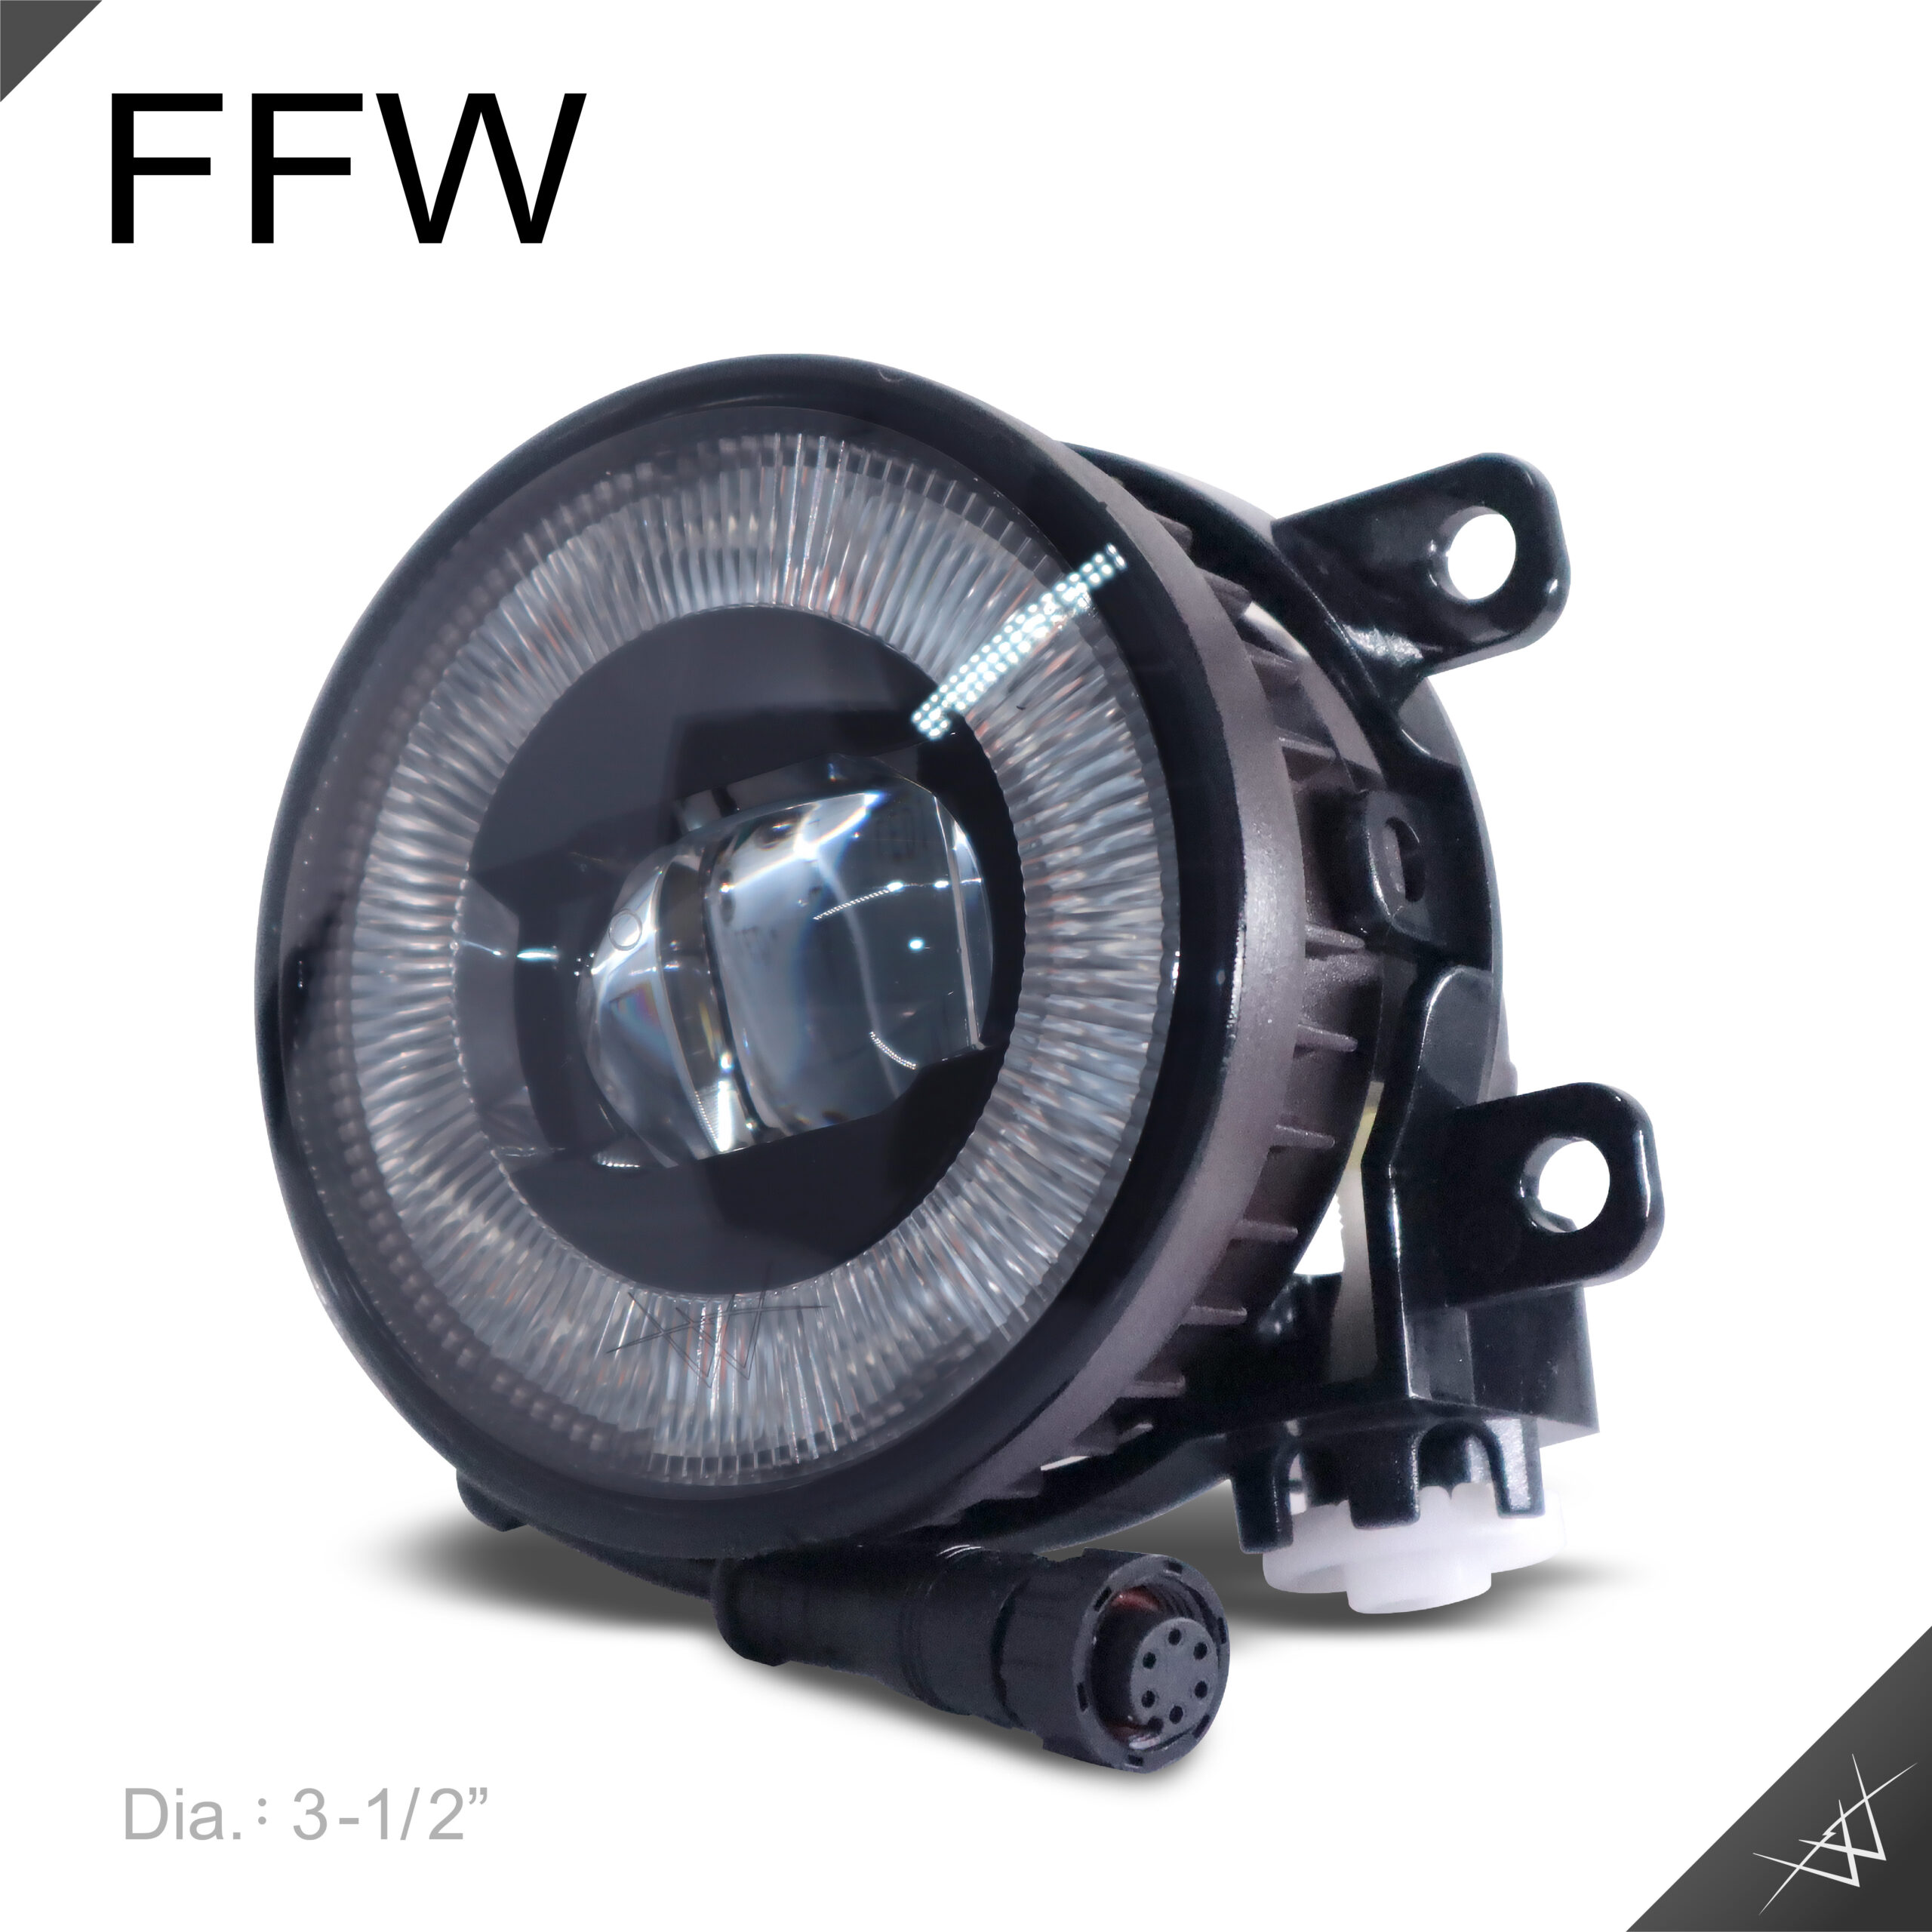 WS Headlight 4in1 Fog Lights - Made in Taiwan